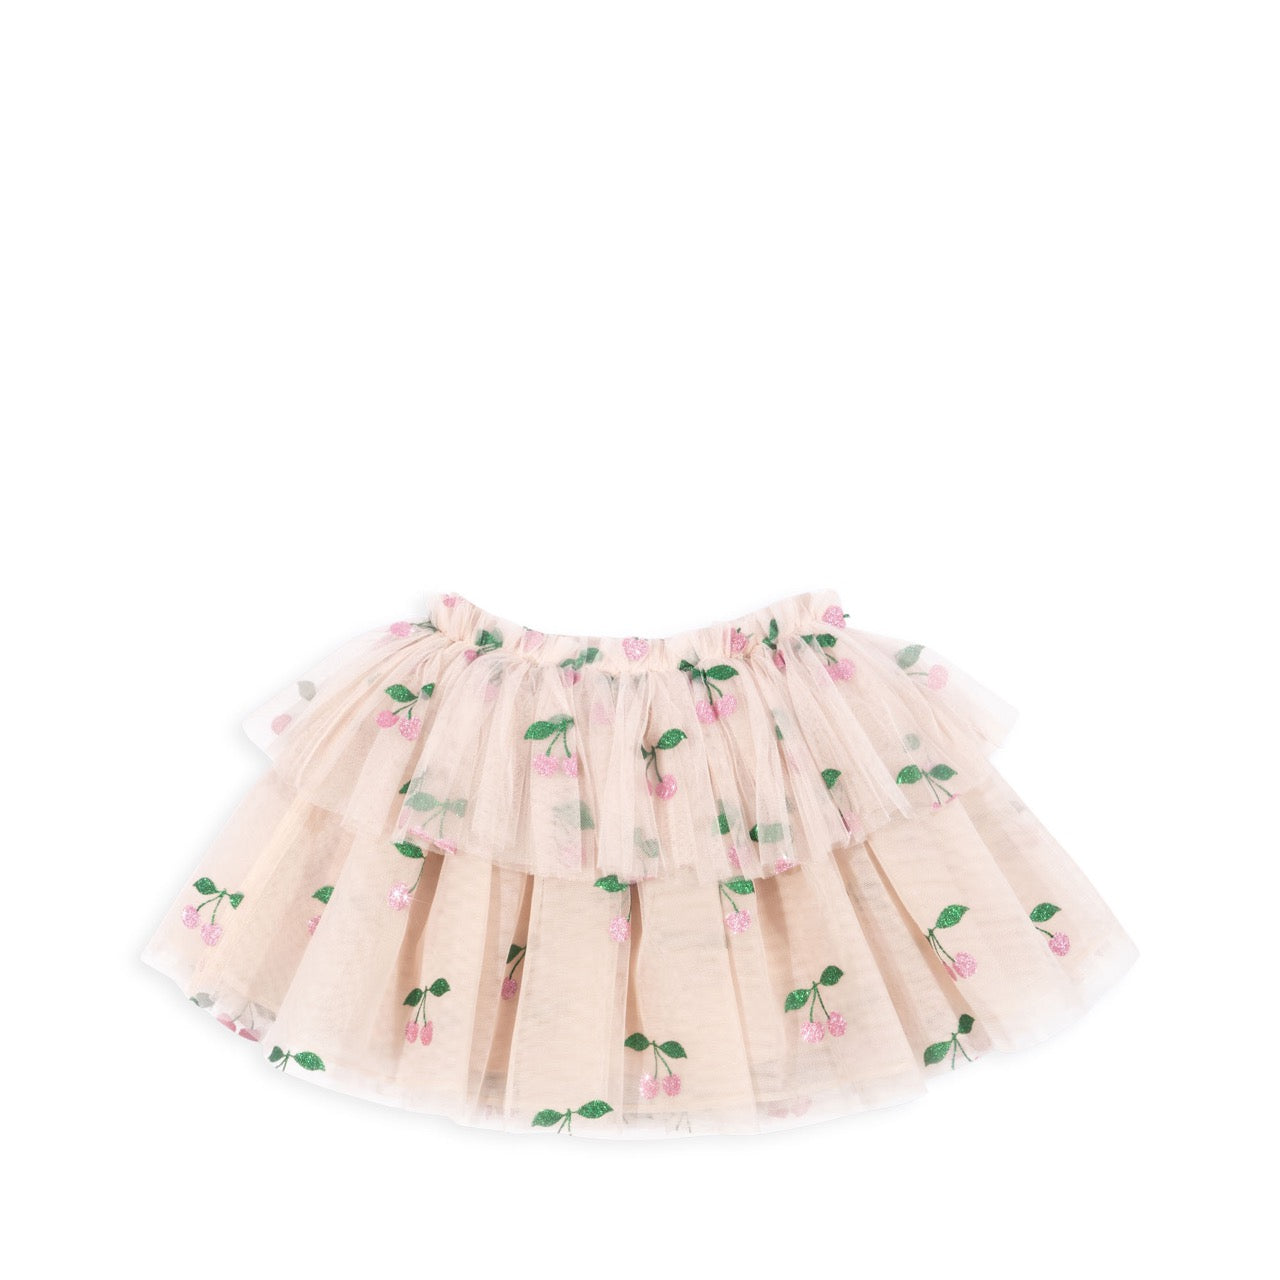 Mili Glitter Skirt - Ma Grande Cerise Pink Glitter